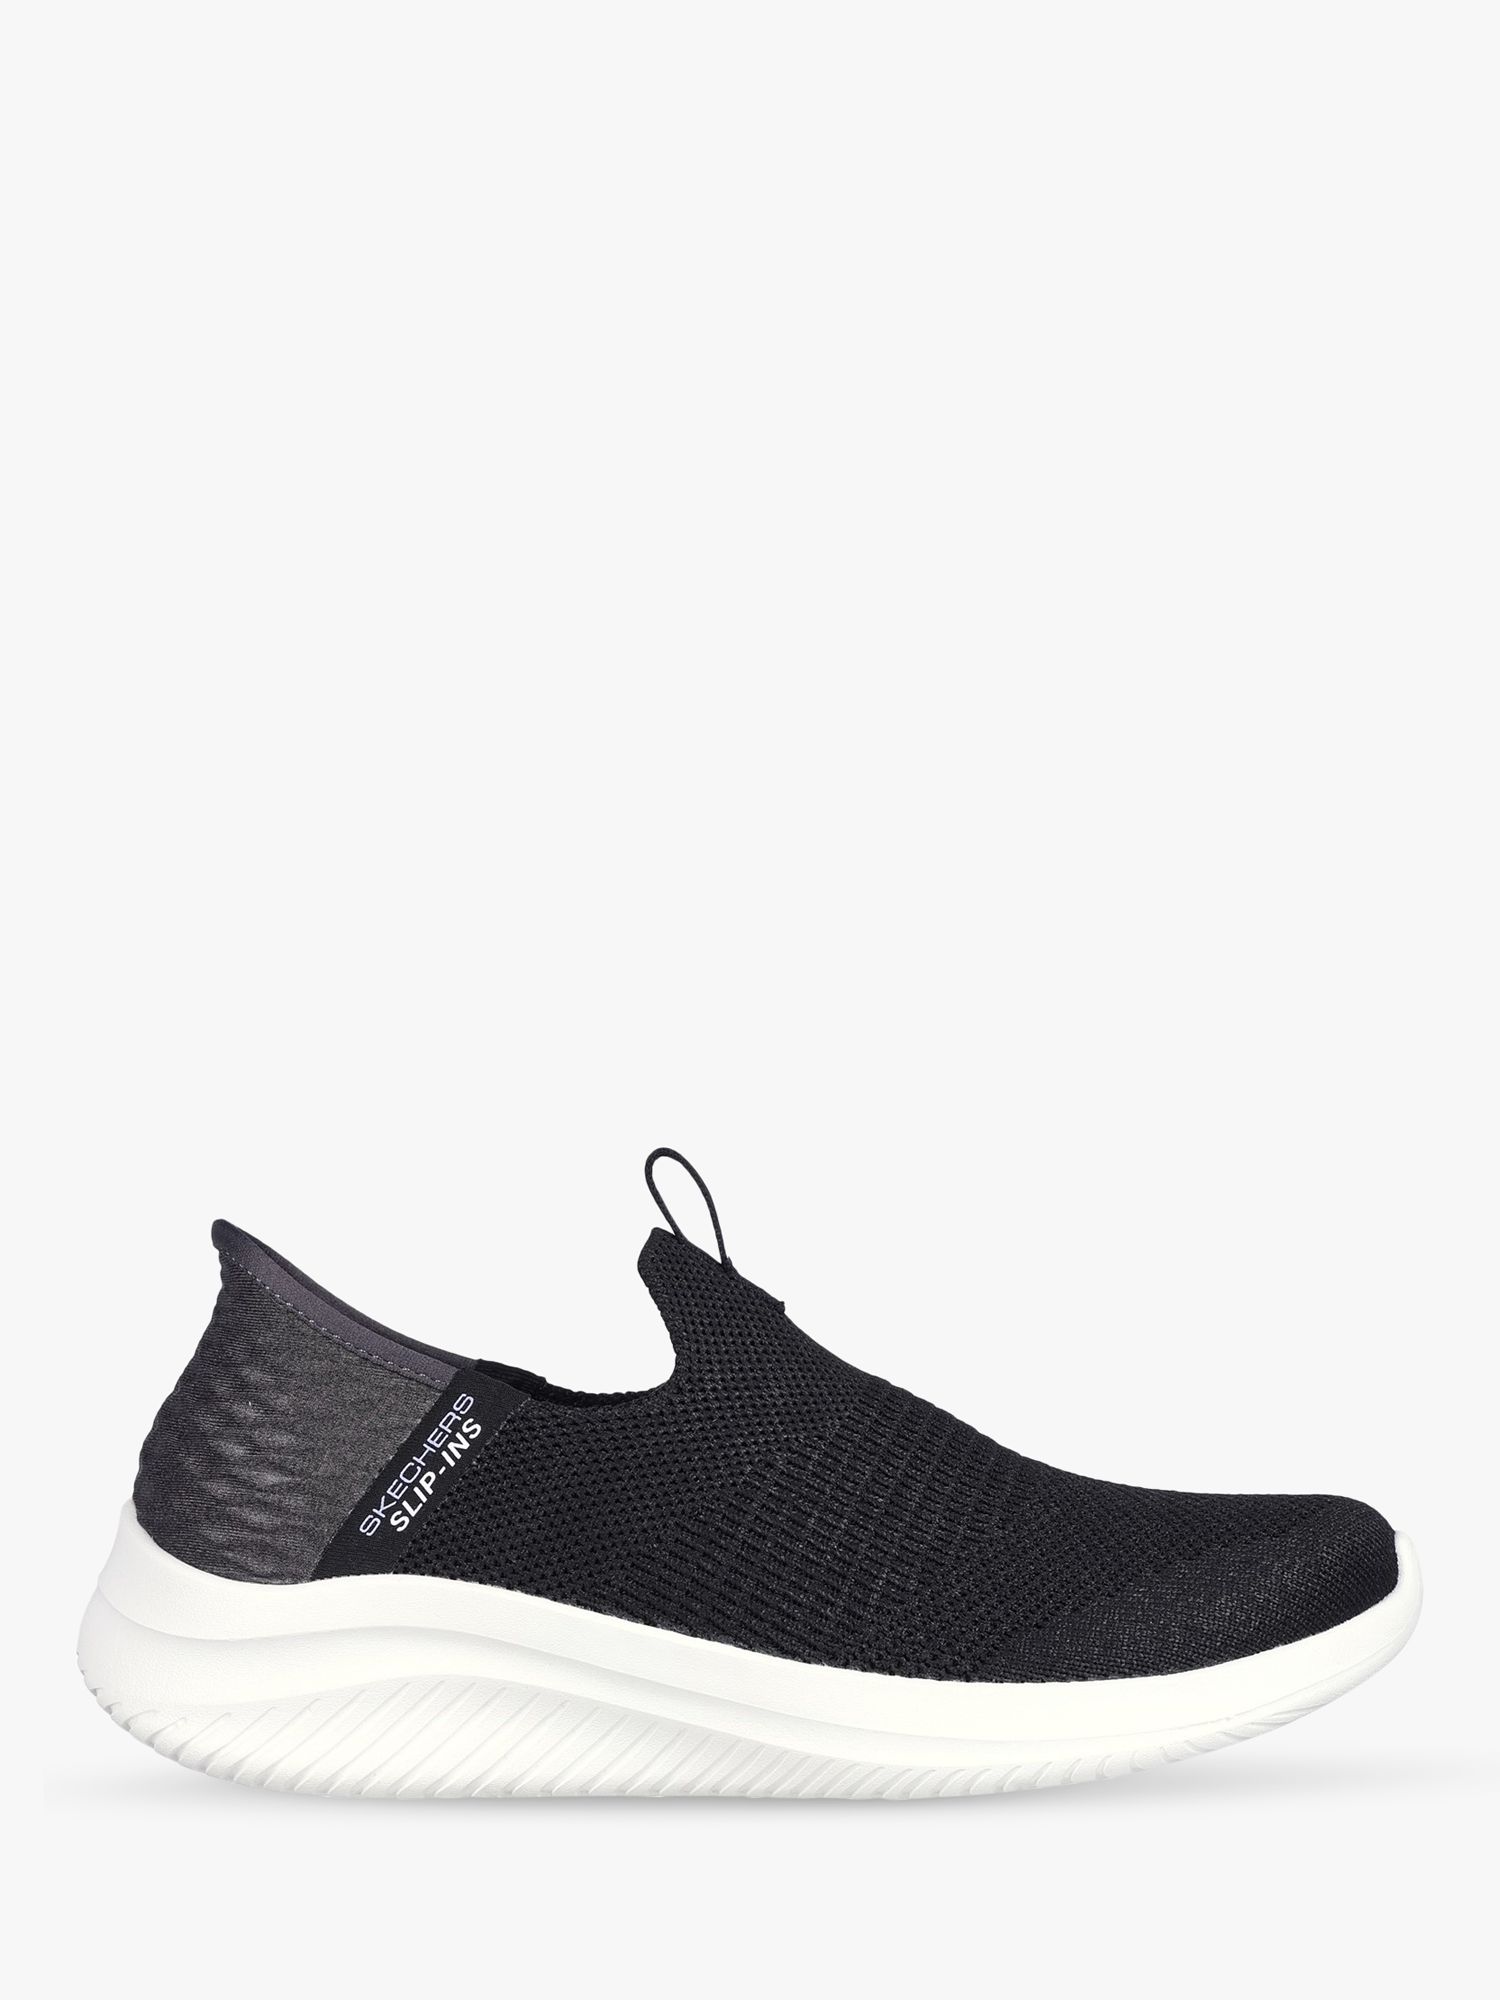 Buy Skechers Go Flex 2 Walking Shoes For Men Online at Best Price